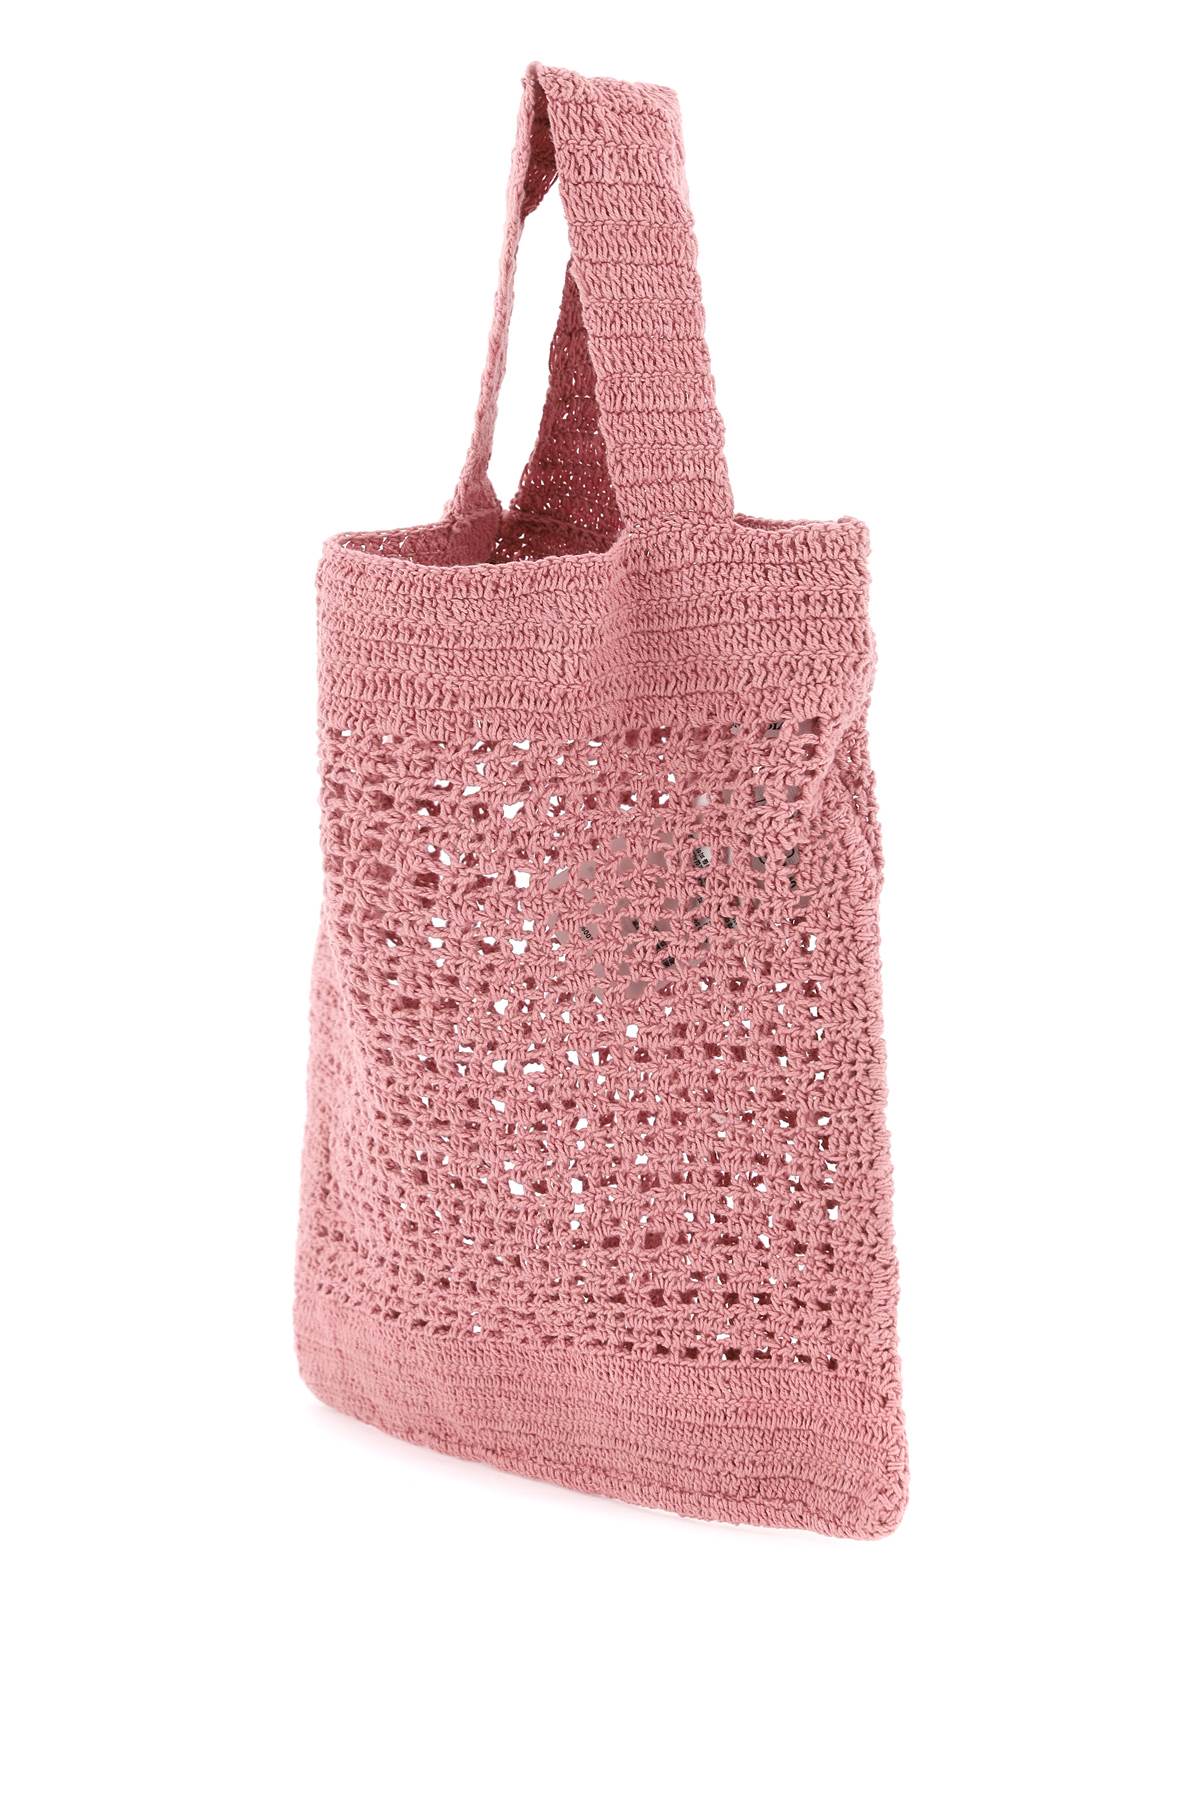 Skall studio evalu crochet handbag in 9-1